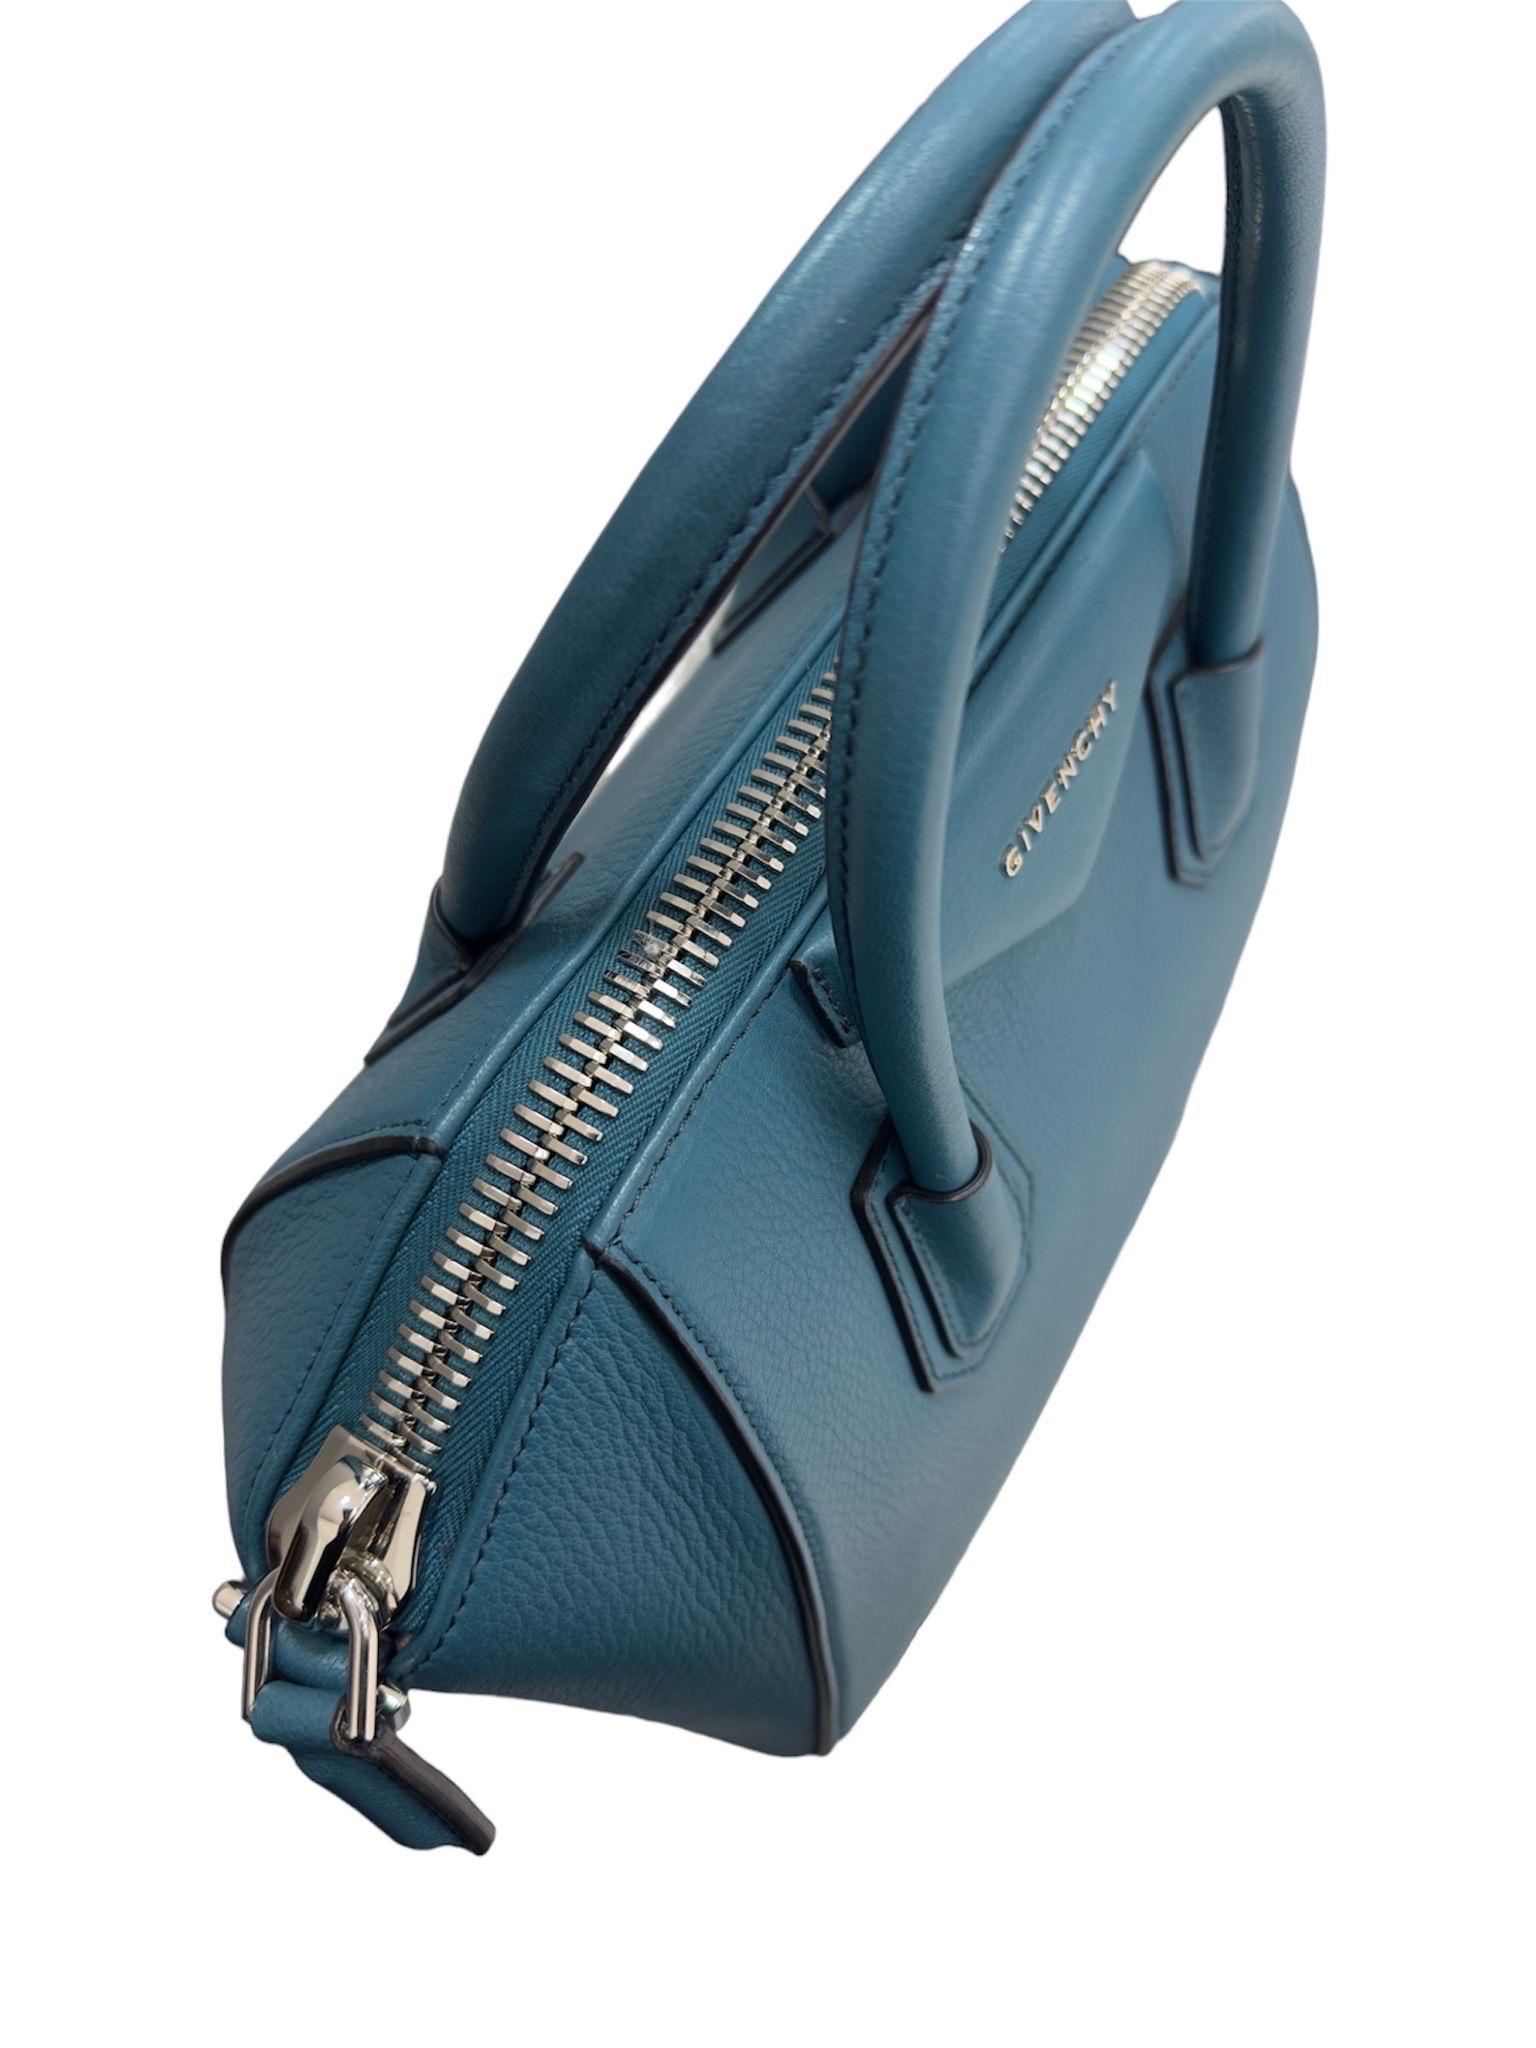 Givenchy Antigona Small Blu Petrolio Borsa A Spalla For Sale 2